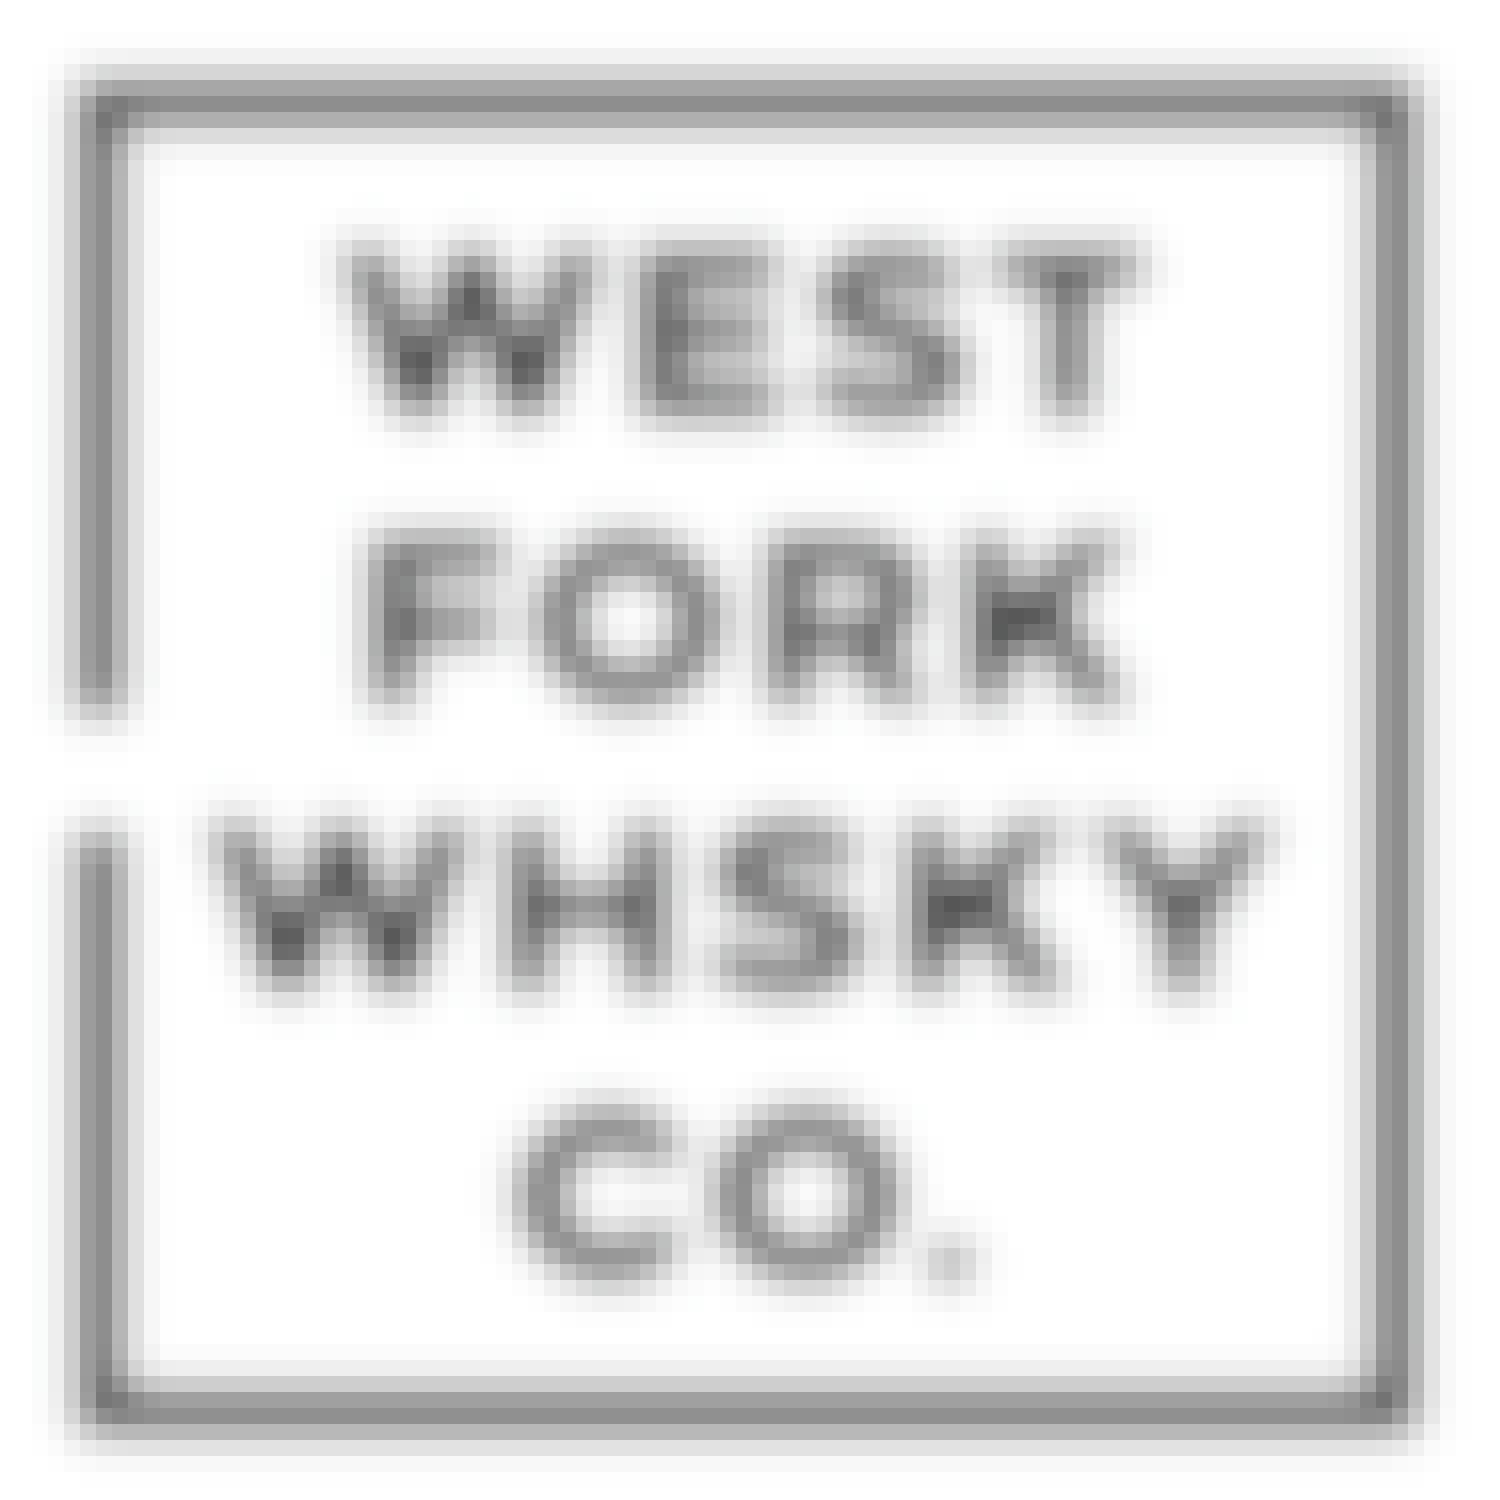 West Fork Whiskey Co. Old Hamer Rye 750ml